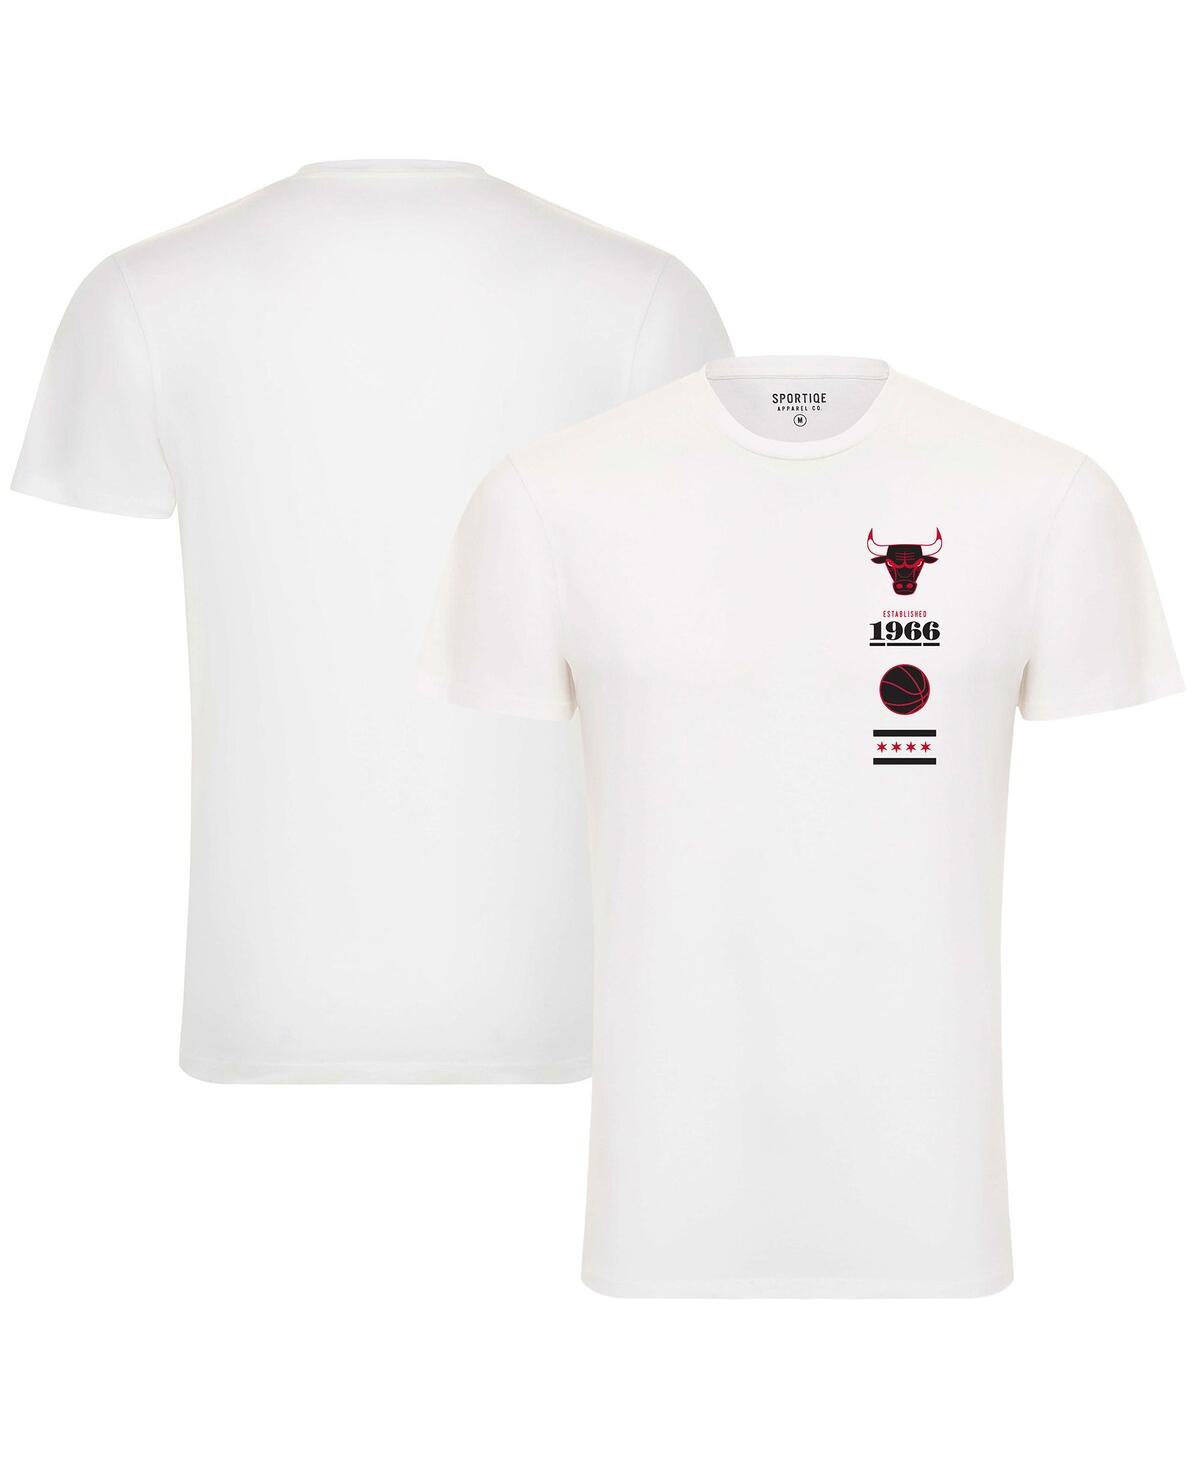 Men's and Women's Sportiqe White Chicago Bulls 1966 Collection City Flag Bingham T-shirt - White